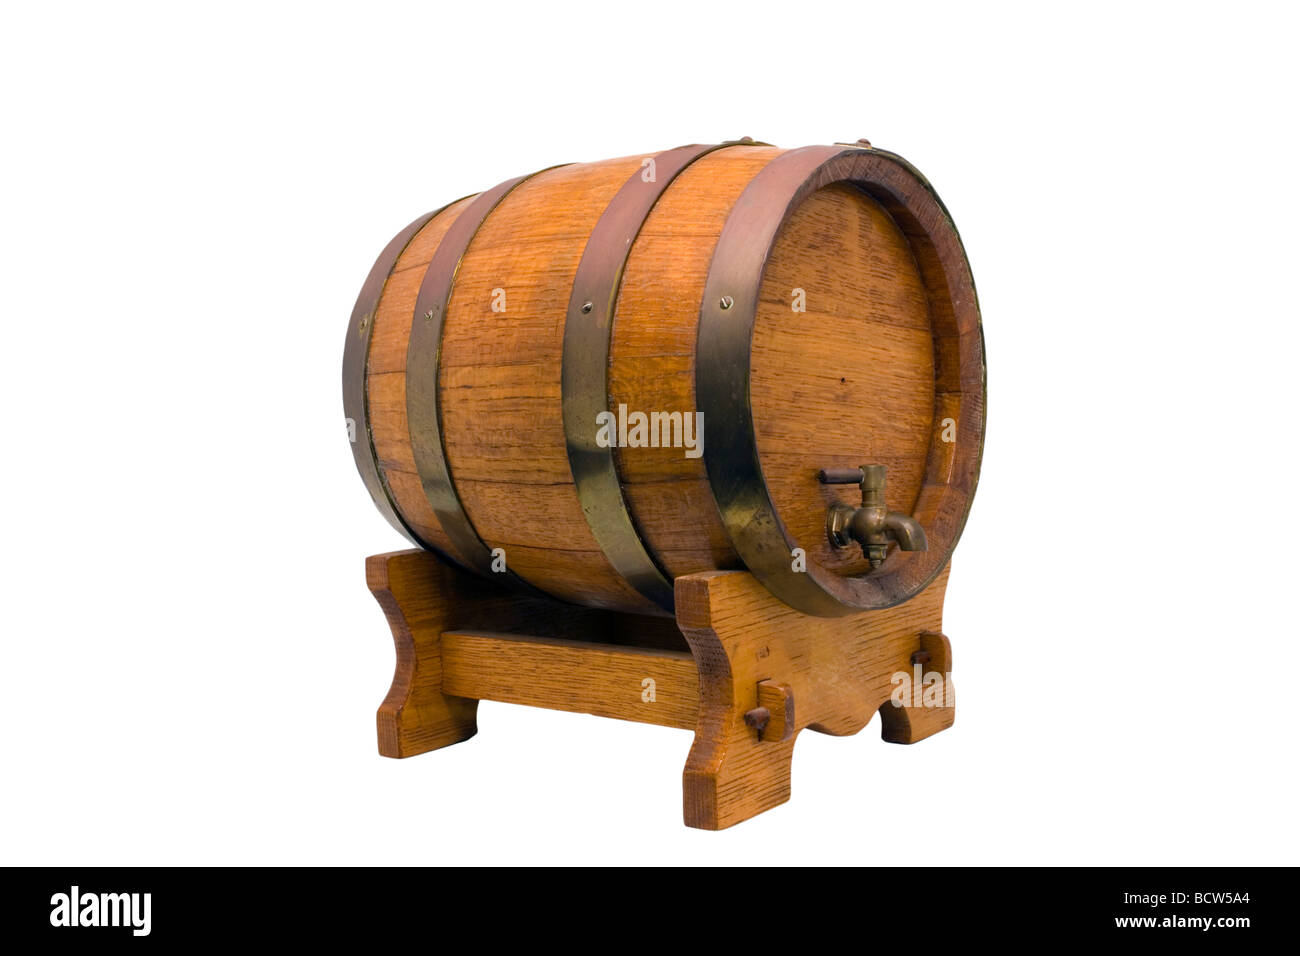 Miniature ornamental wine barrel or vat Stock Photo